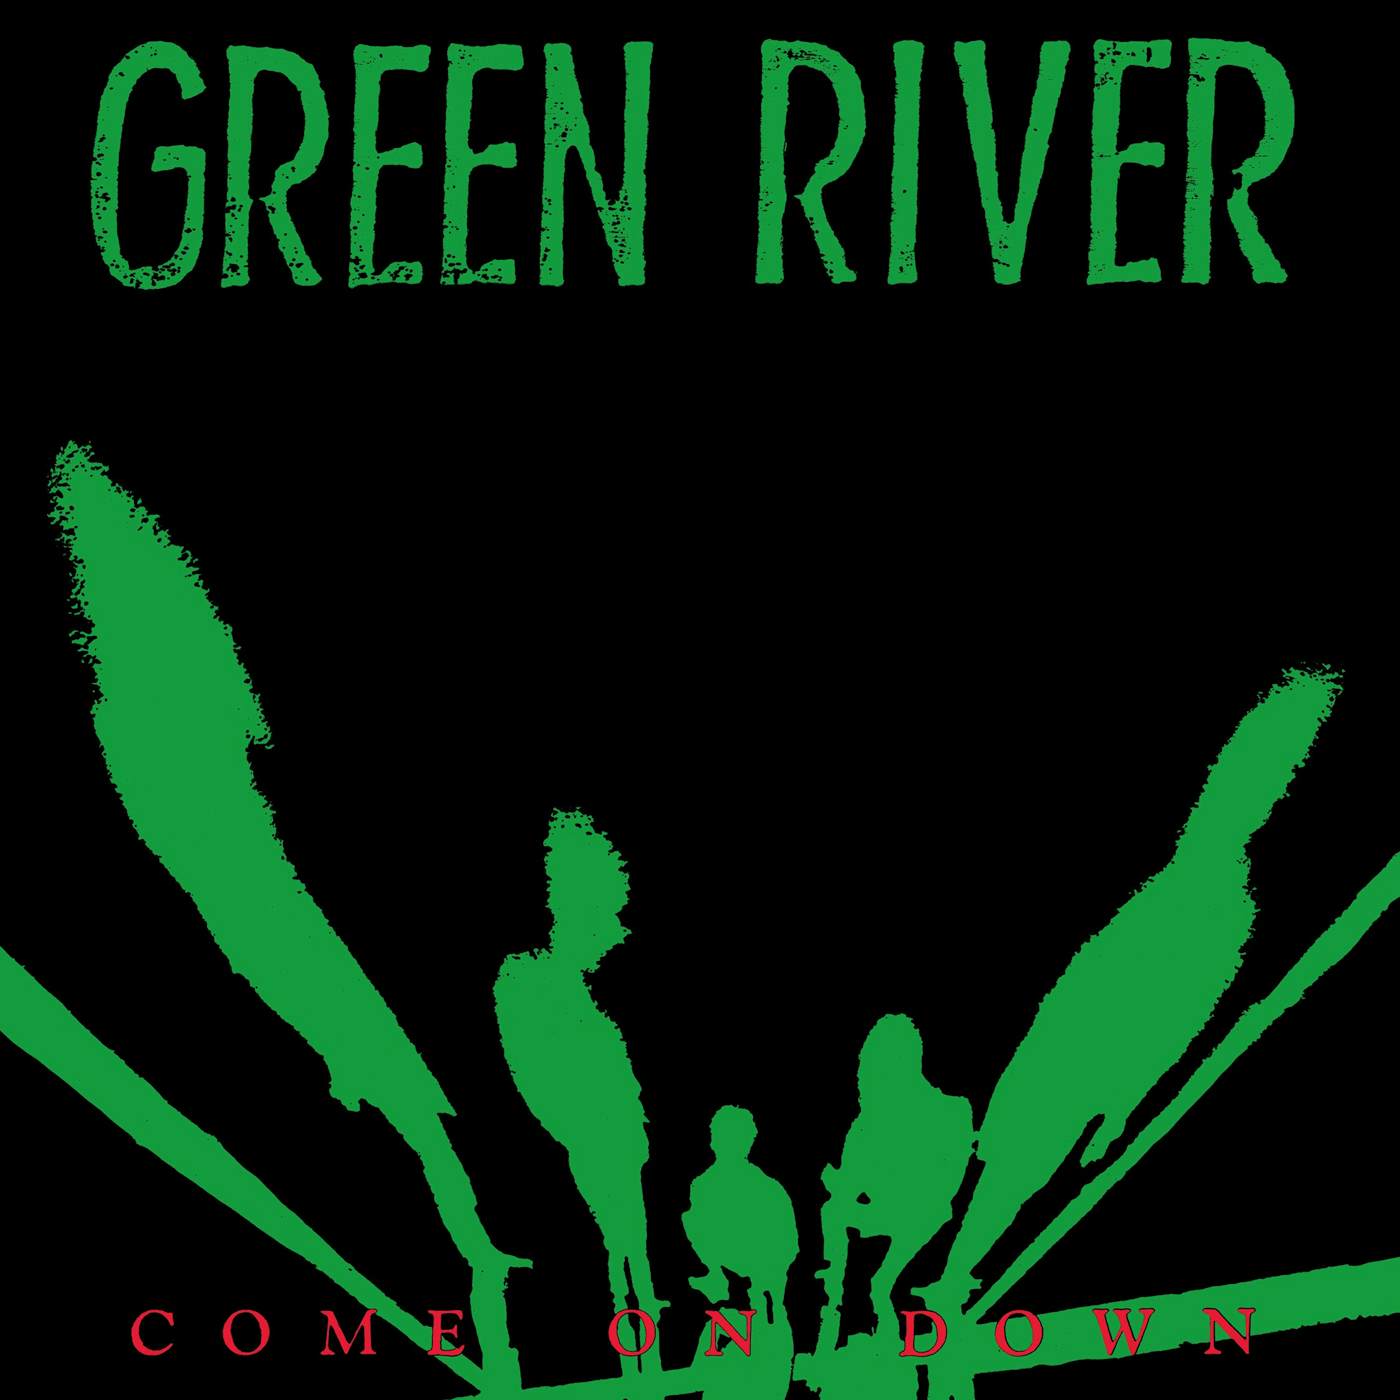 Green River Come On Down Vinyl Record